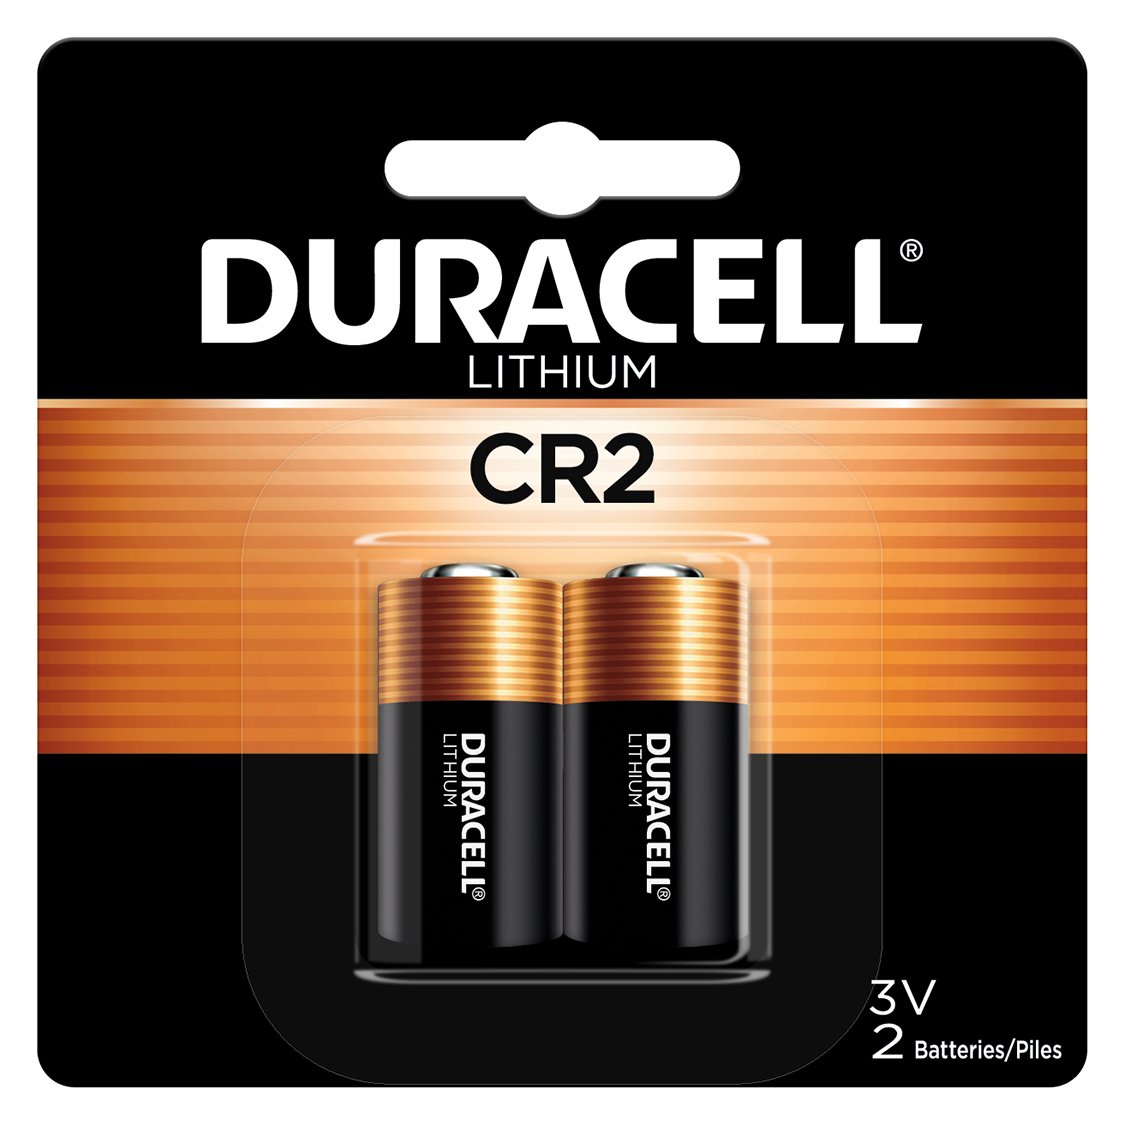 Duracell CR2 3V Lithium Battery - Shop Batteries at H-E-B